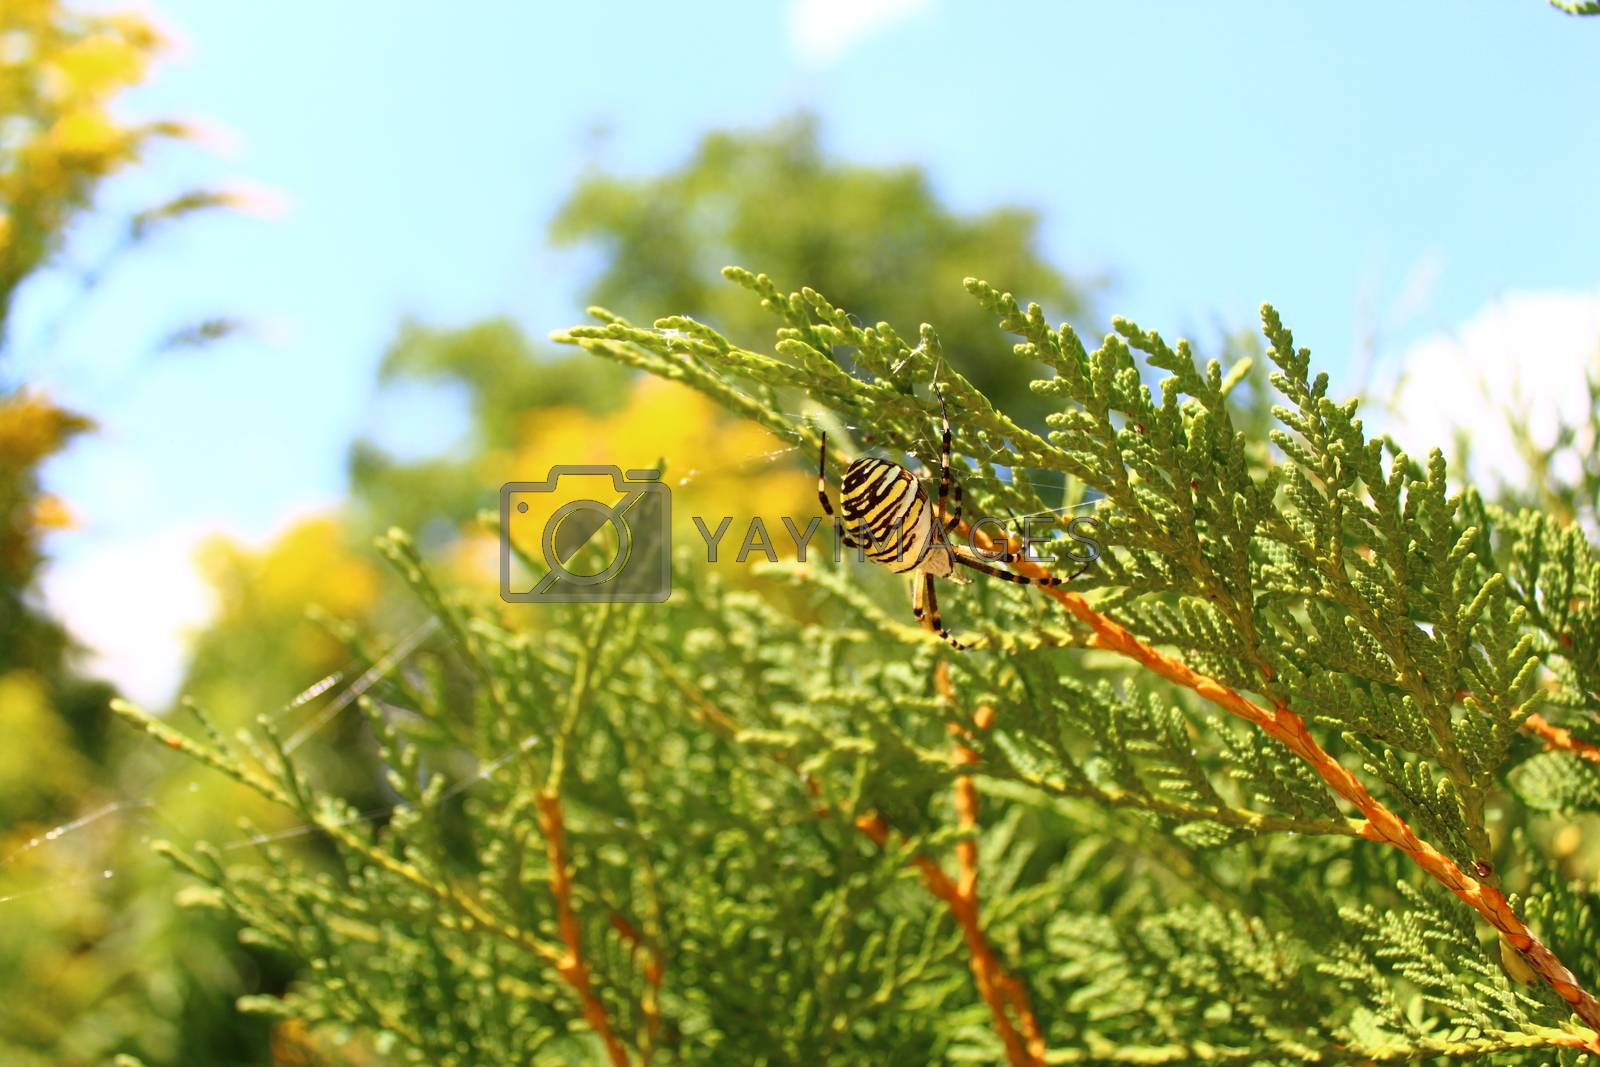 Royalty free image of wasp spider in the garden by martina_unbehauen